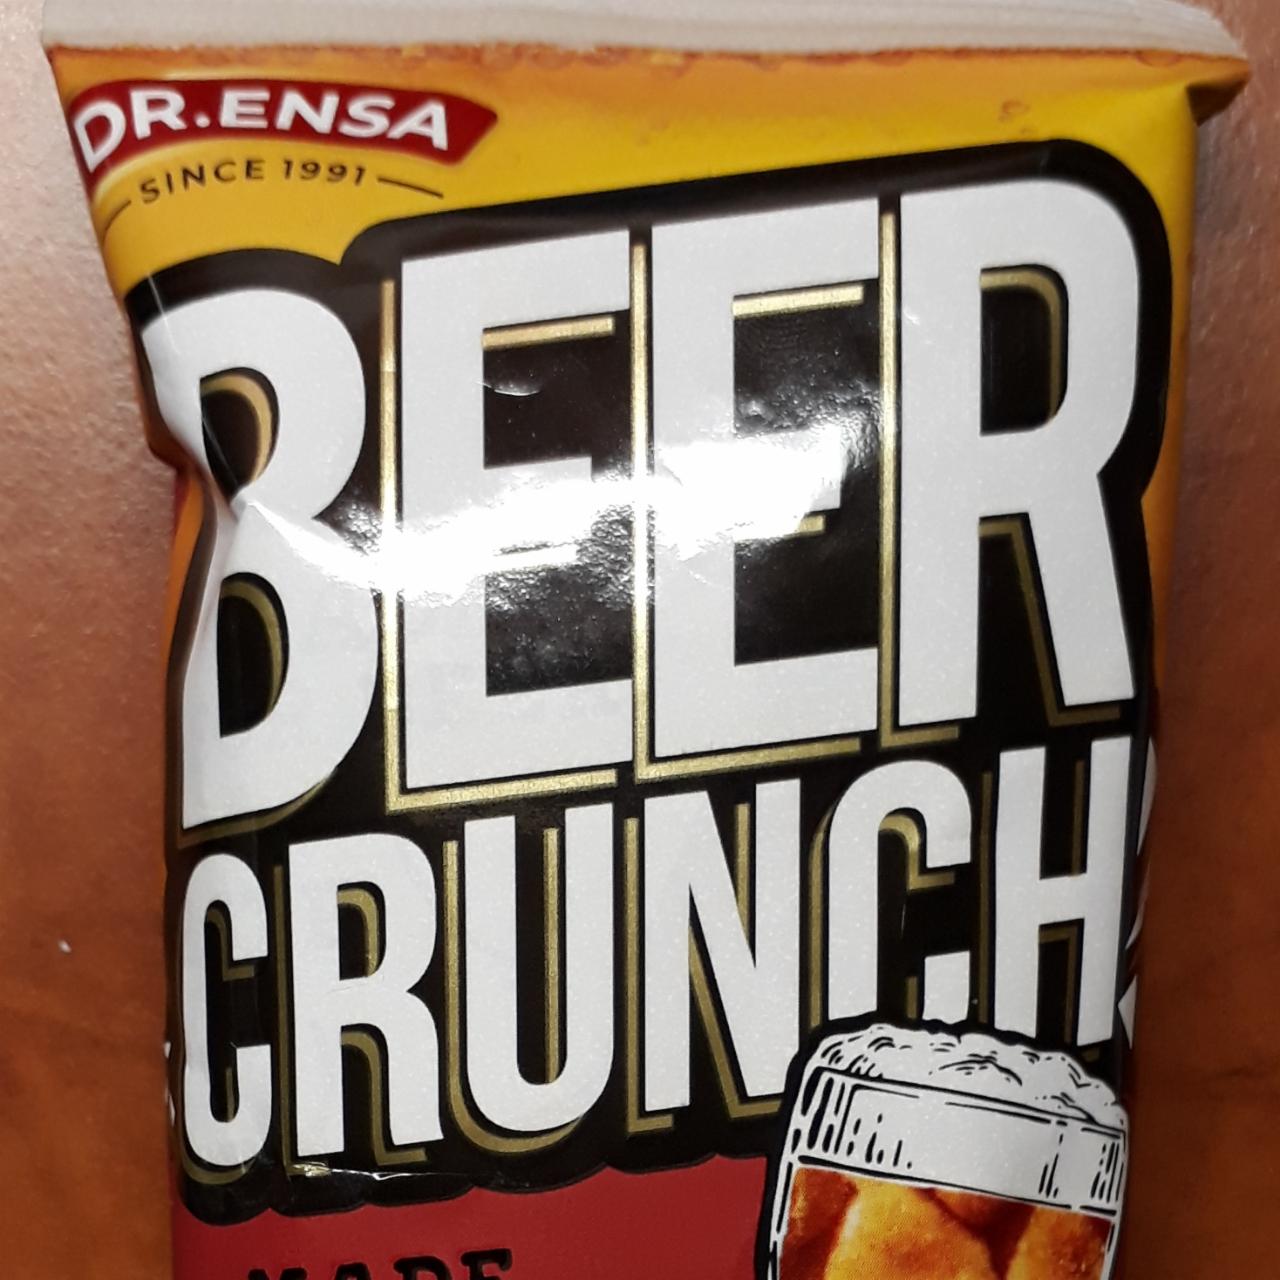 Fotografie - Beer Crunch Chilli bob pražený Dr.Ensa